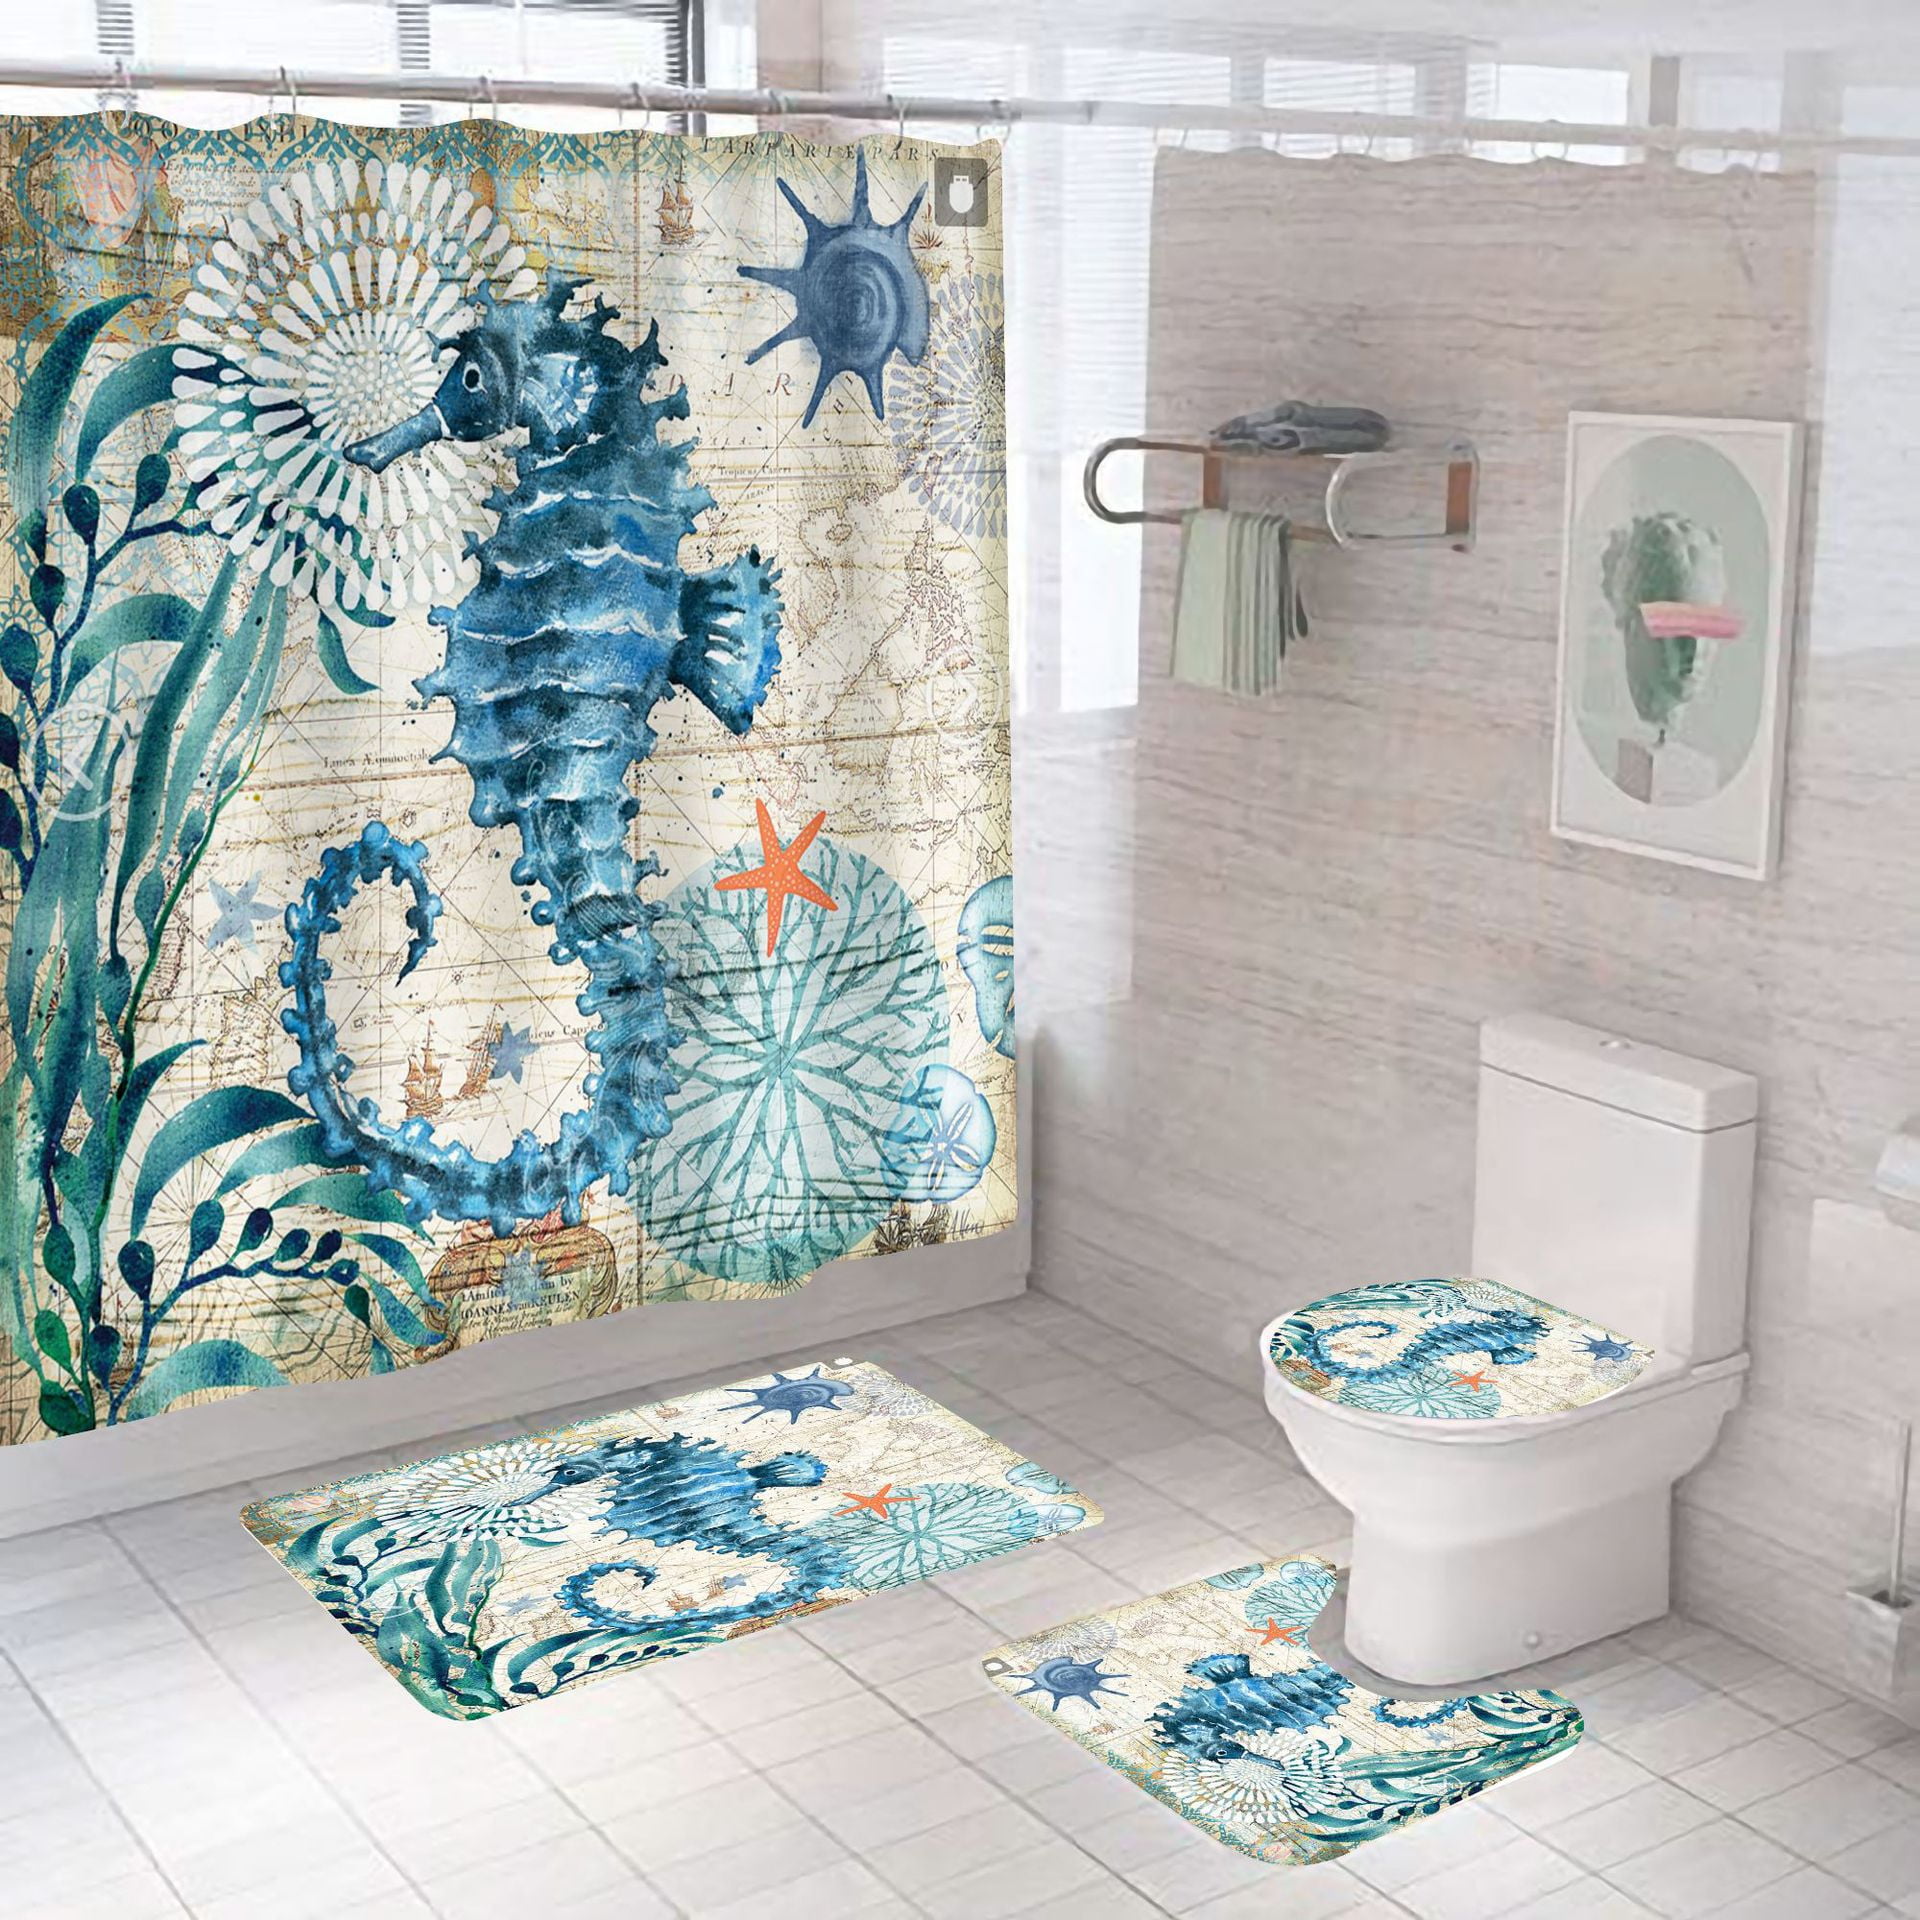 4Pcs Sea Turtles Bath Bathroom Shower Curtain Non Slip Toilet Cover Rugs Mat Set 